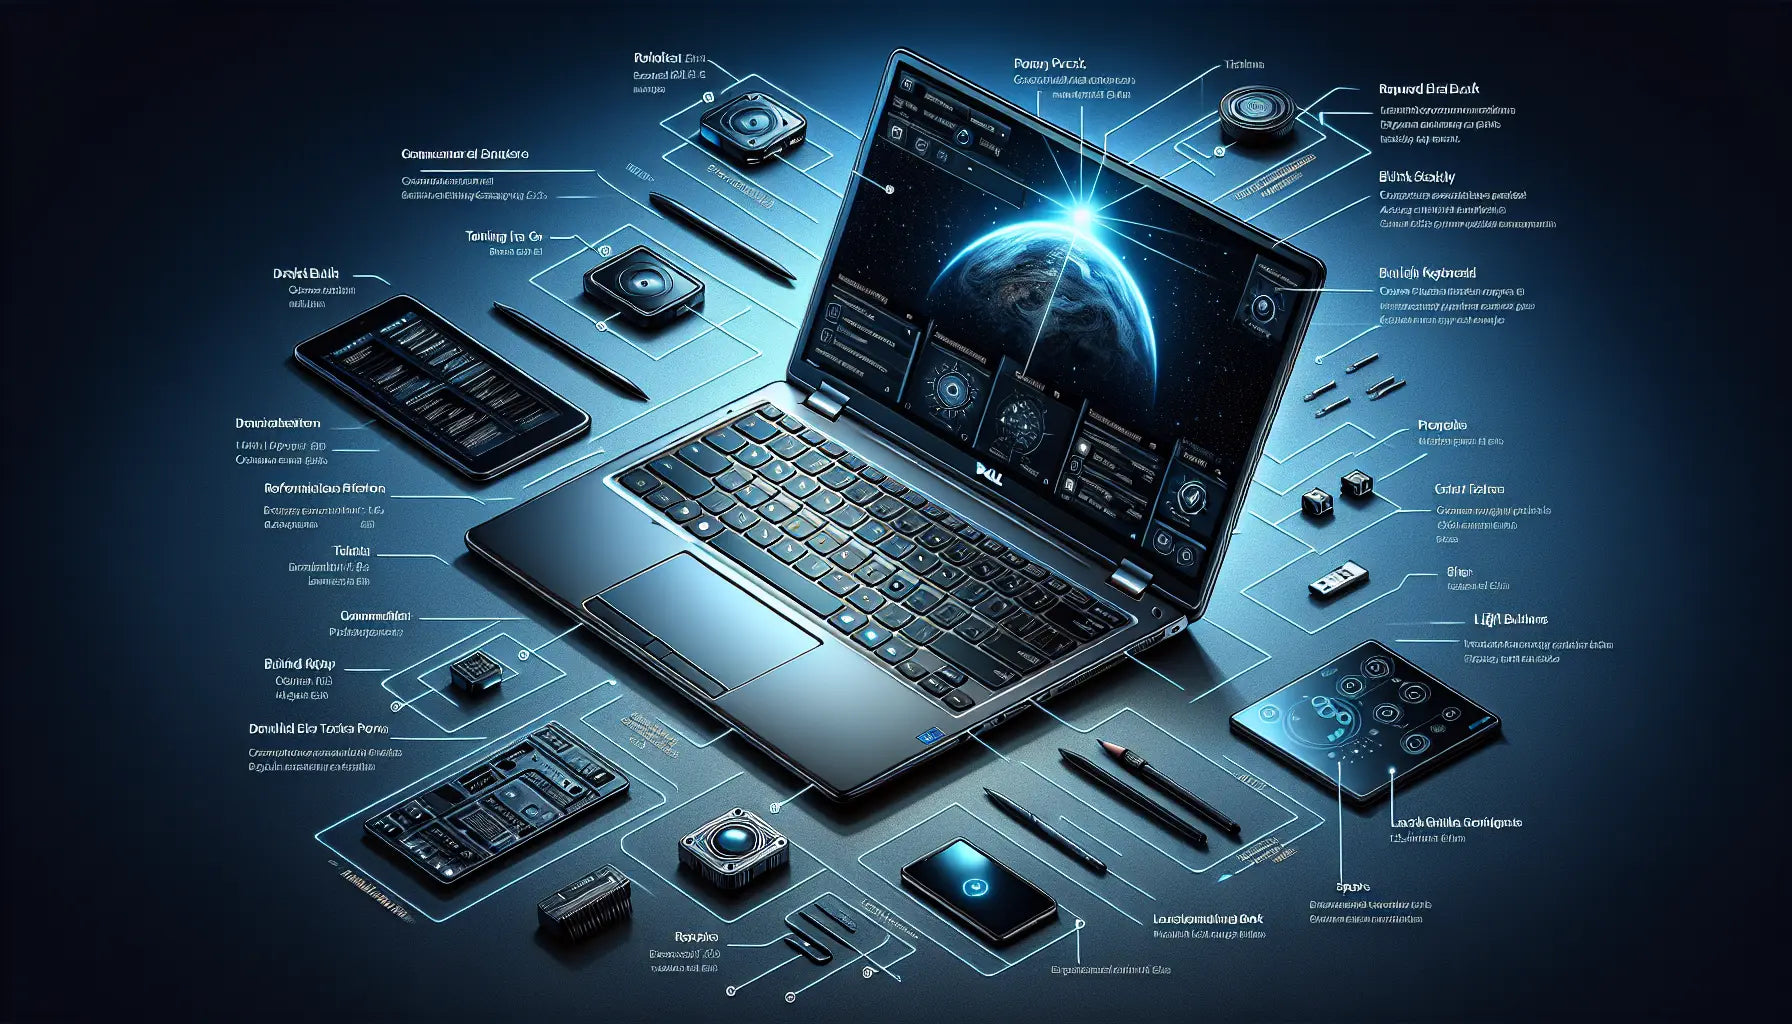 Dell Latitude E5290 I5 8th Gen, 256GBSSD, 8GB Ram Laptop: A Comprehensive Review